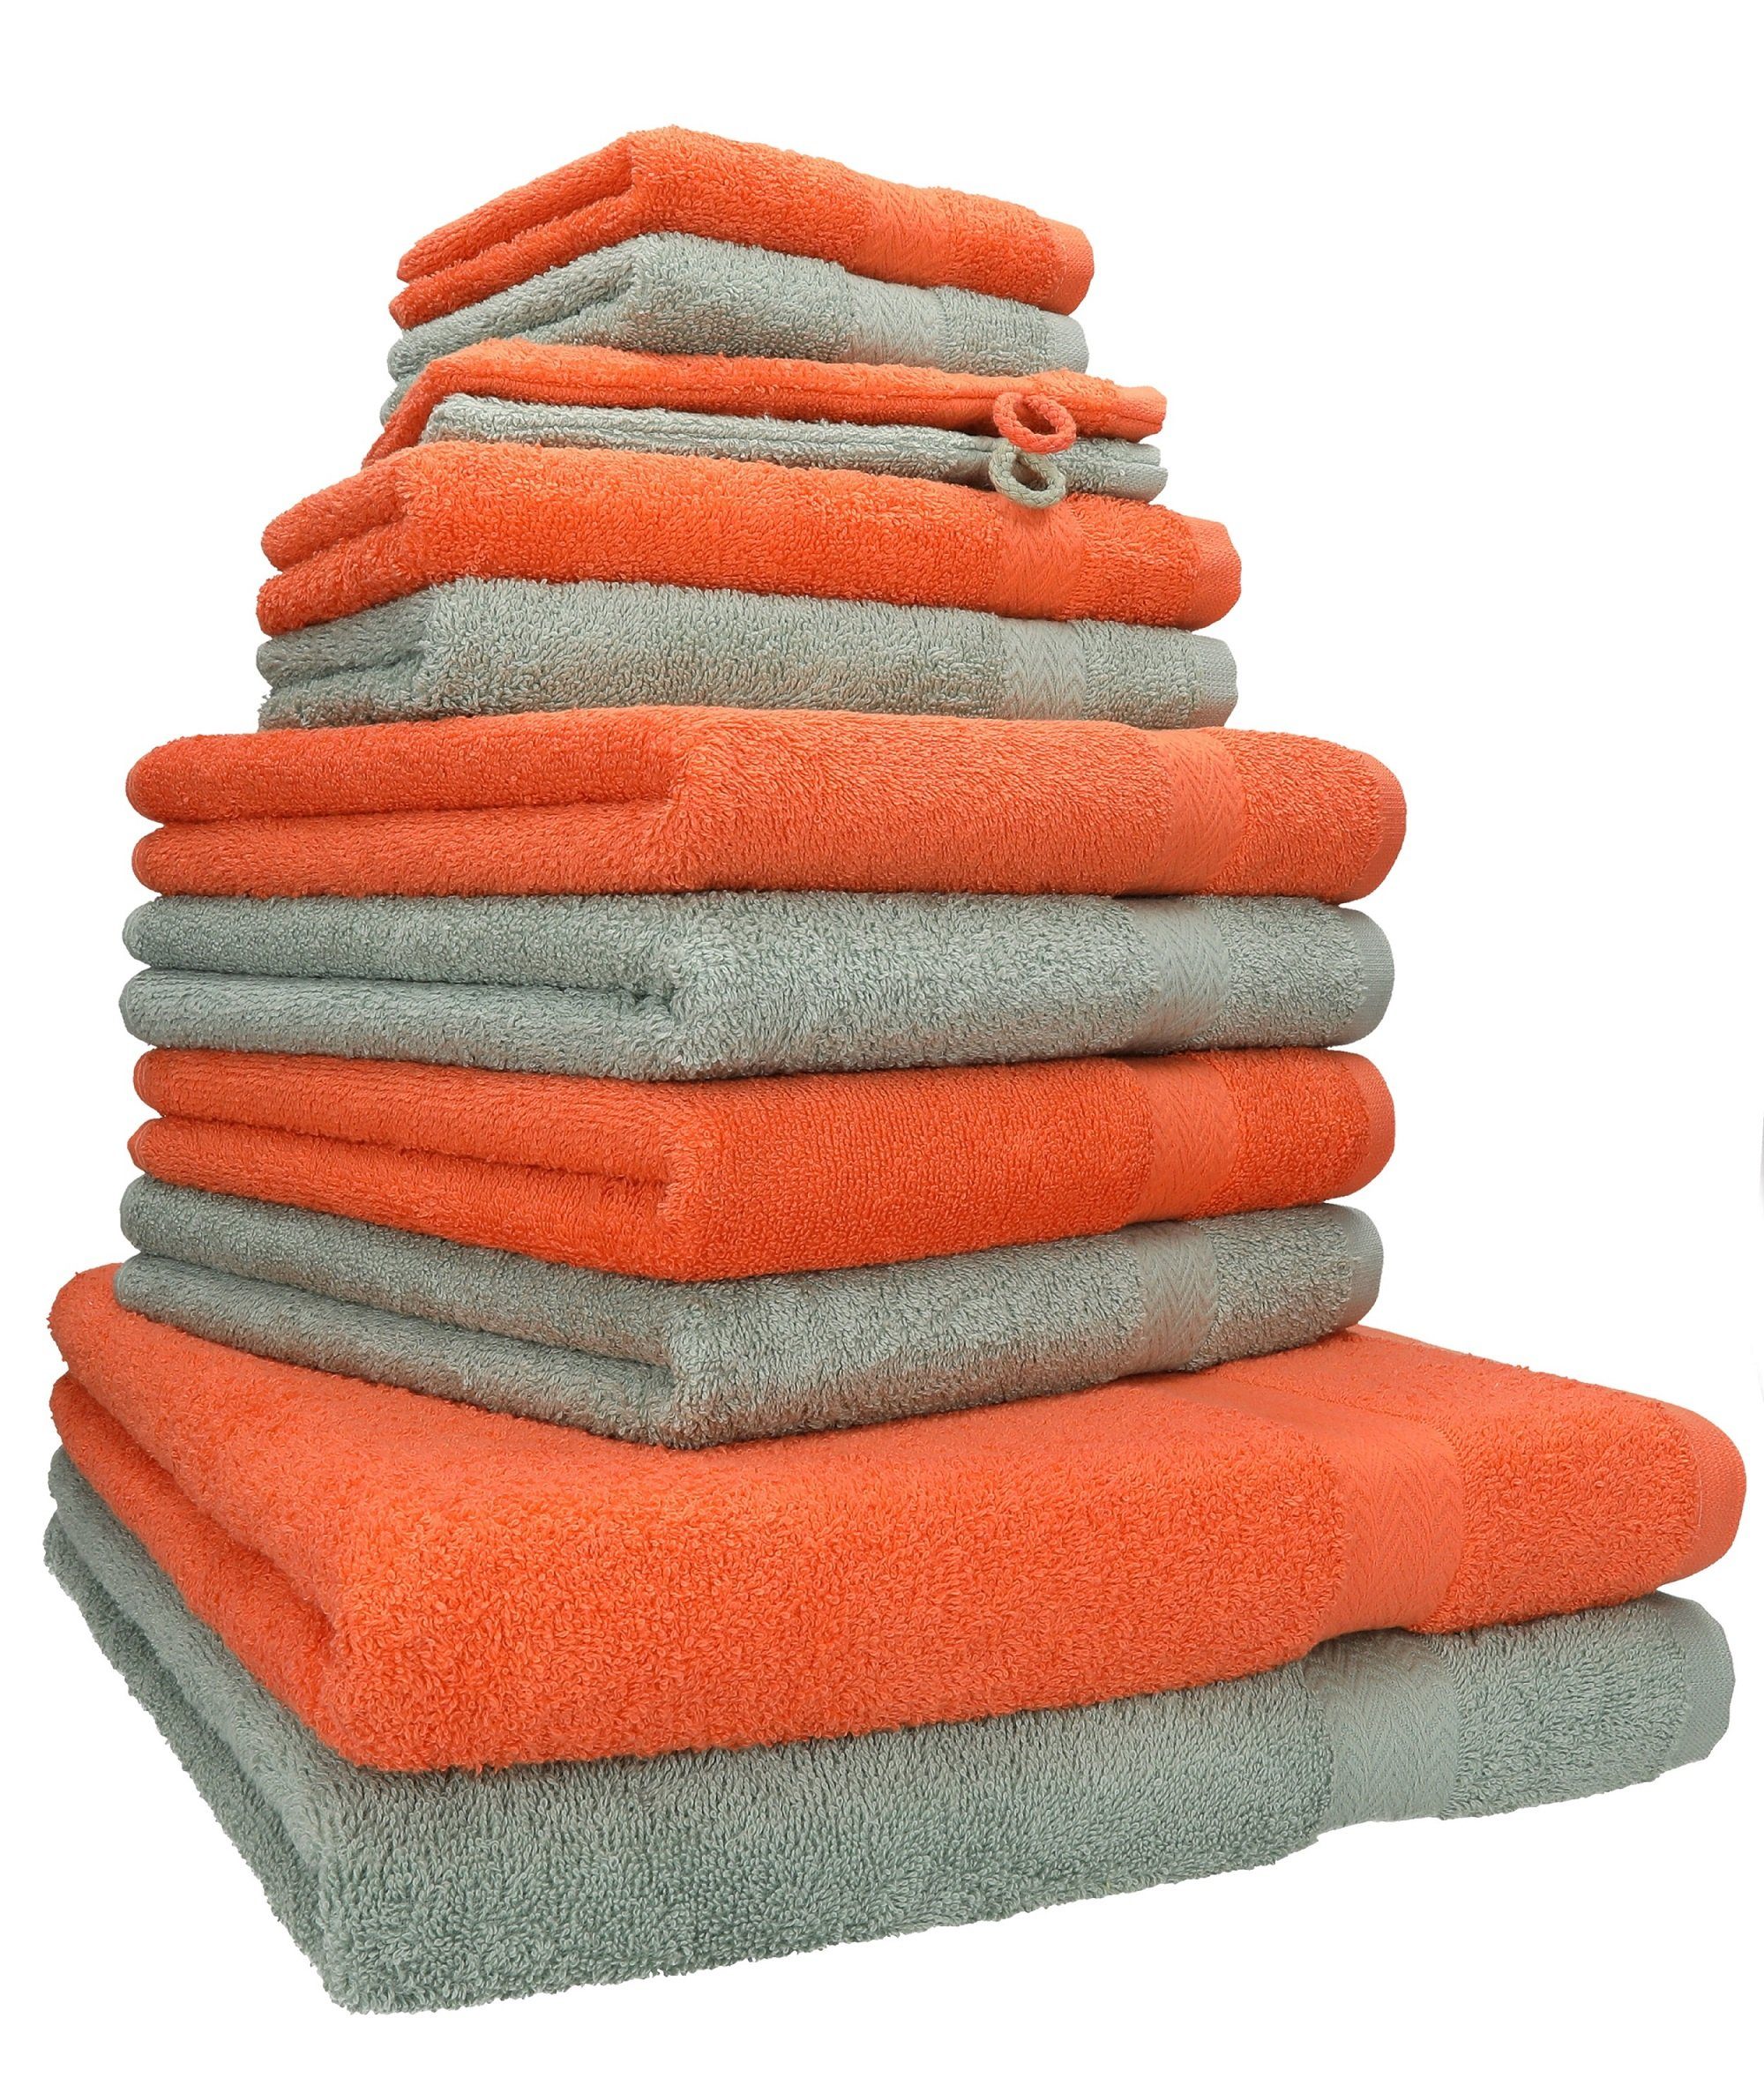 Betz Handtuch Set 12-TLG. Handtuch Set Premium 100% Baumwolle 2 Duschtücher 4 Handtücher 2 Gästetücher 2 Seiftücher 2 Waschhandschuhe Farbe blutorange heugrün, 100% Baumwolle, (12-tlg)